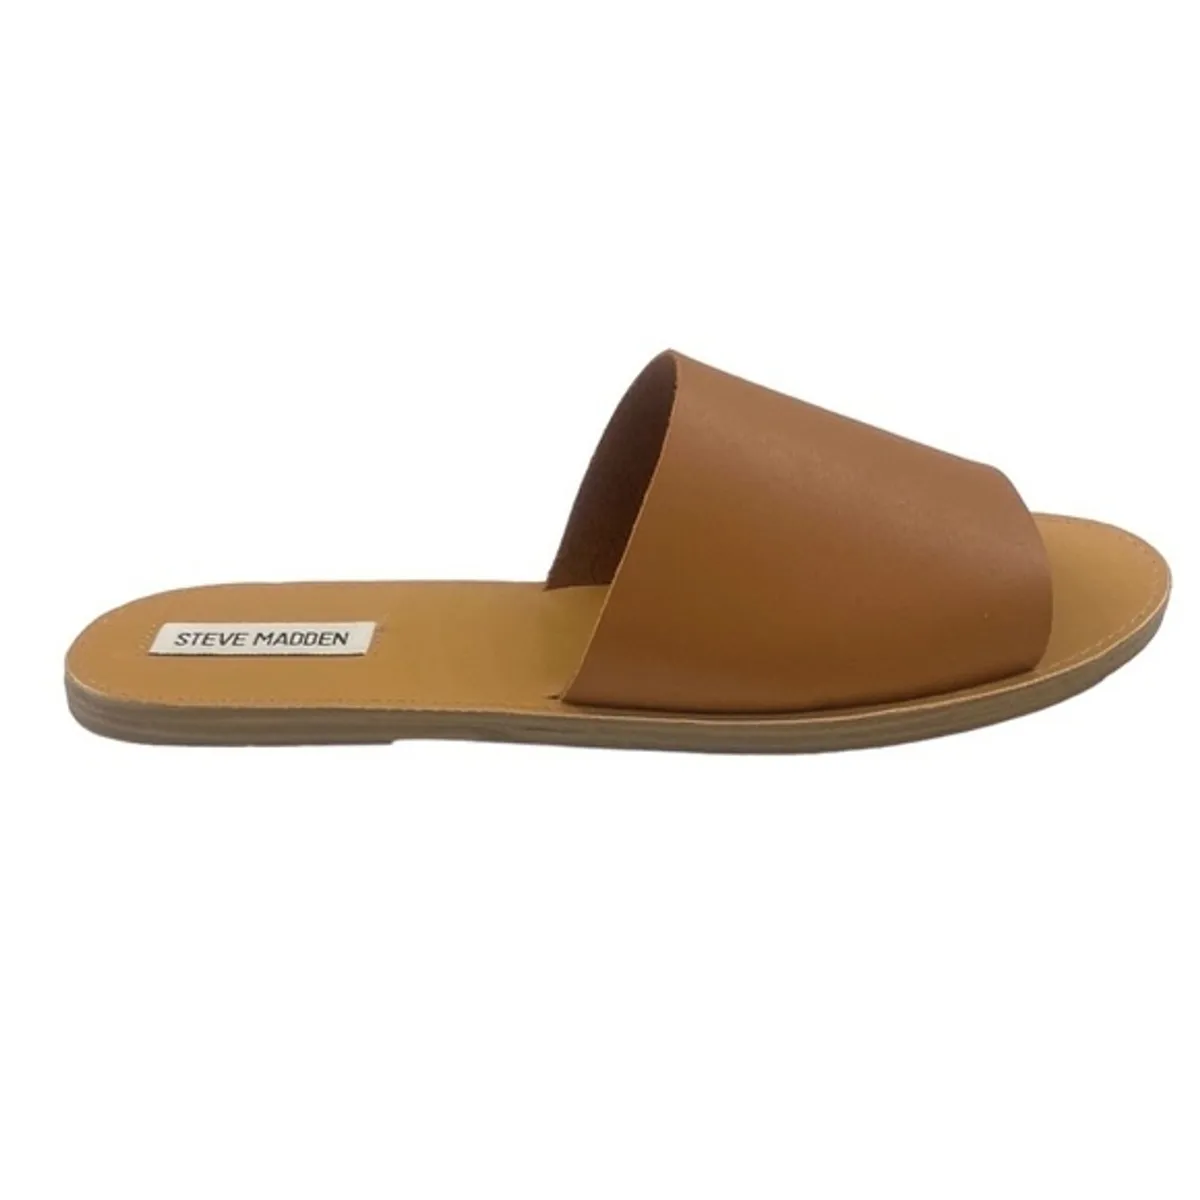 Steve Madden Grace Slides Sandals Shoes Slip Ons Brown Leather Size 11 New